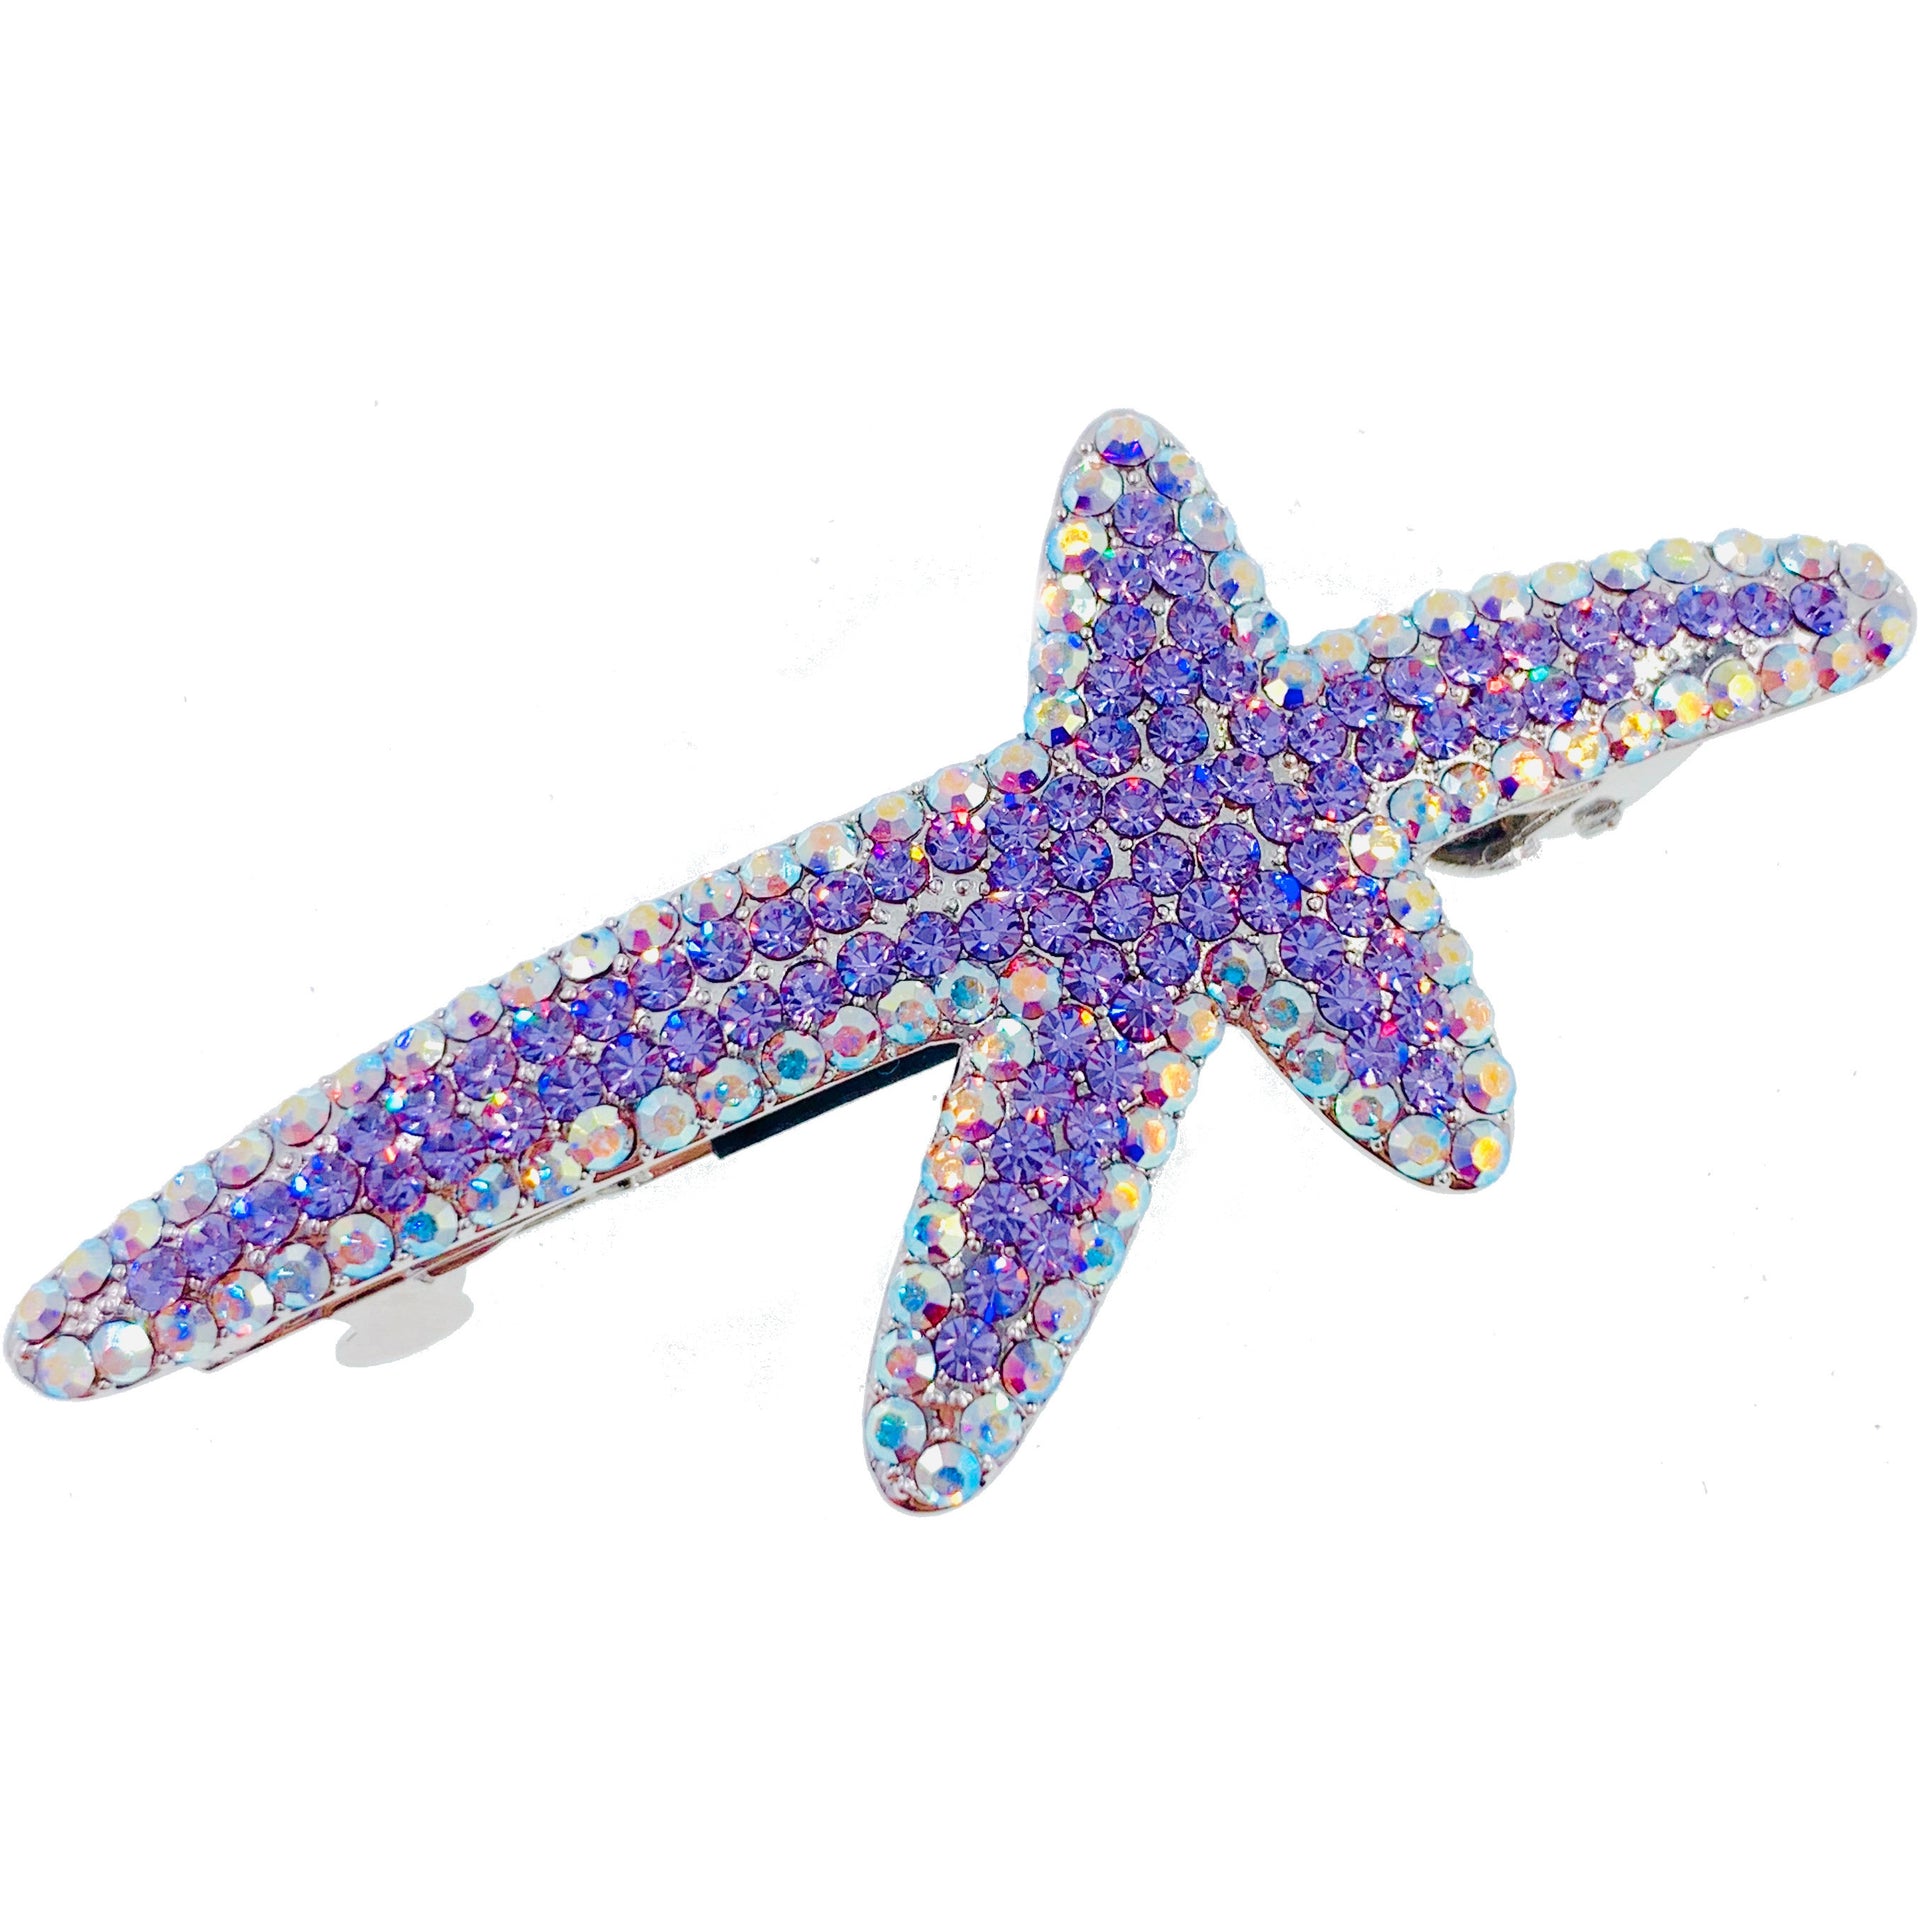 Astropecten Starfish Sea Star Barrette use Swarovski Crystal silver base Purple Blue Pink Clear Amber Brown, Barrette - MOGHANT